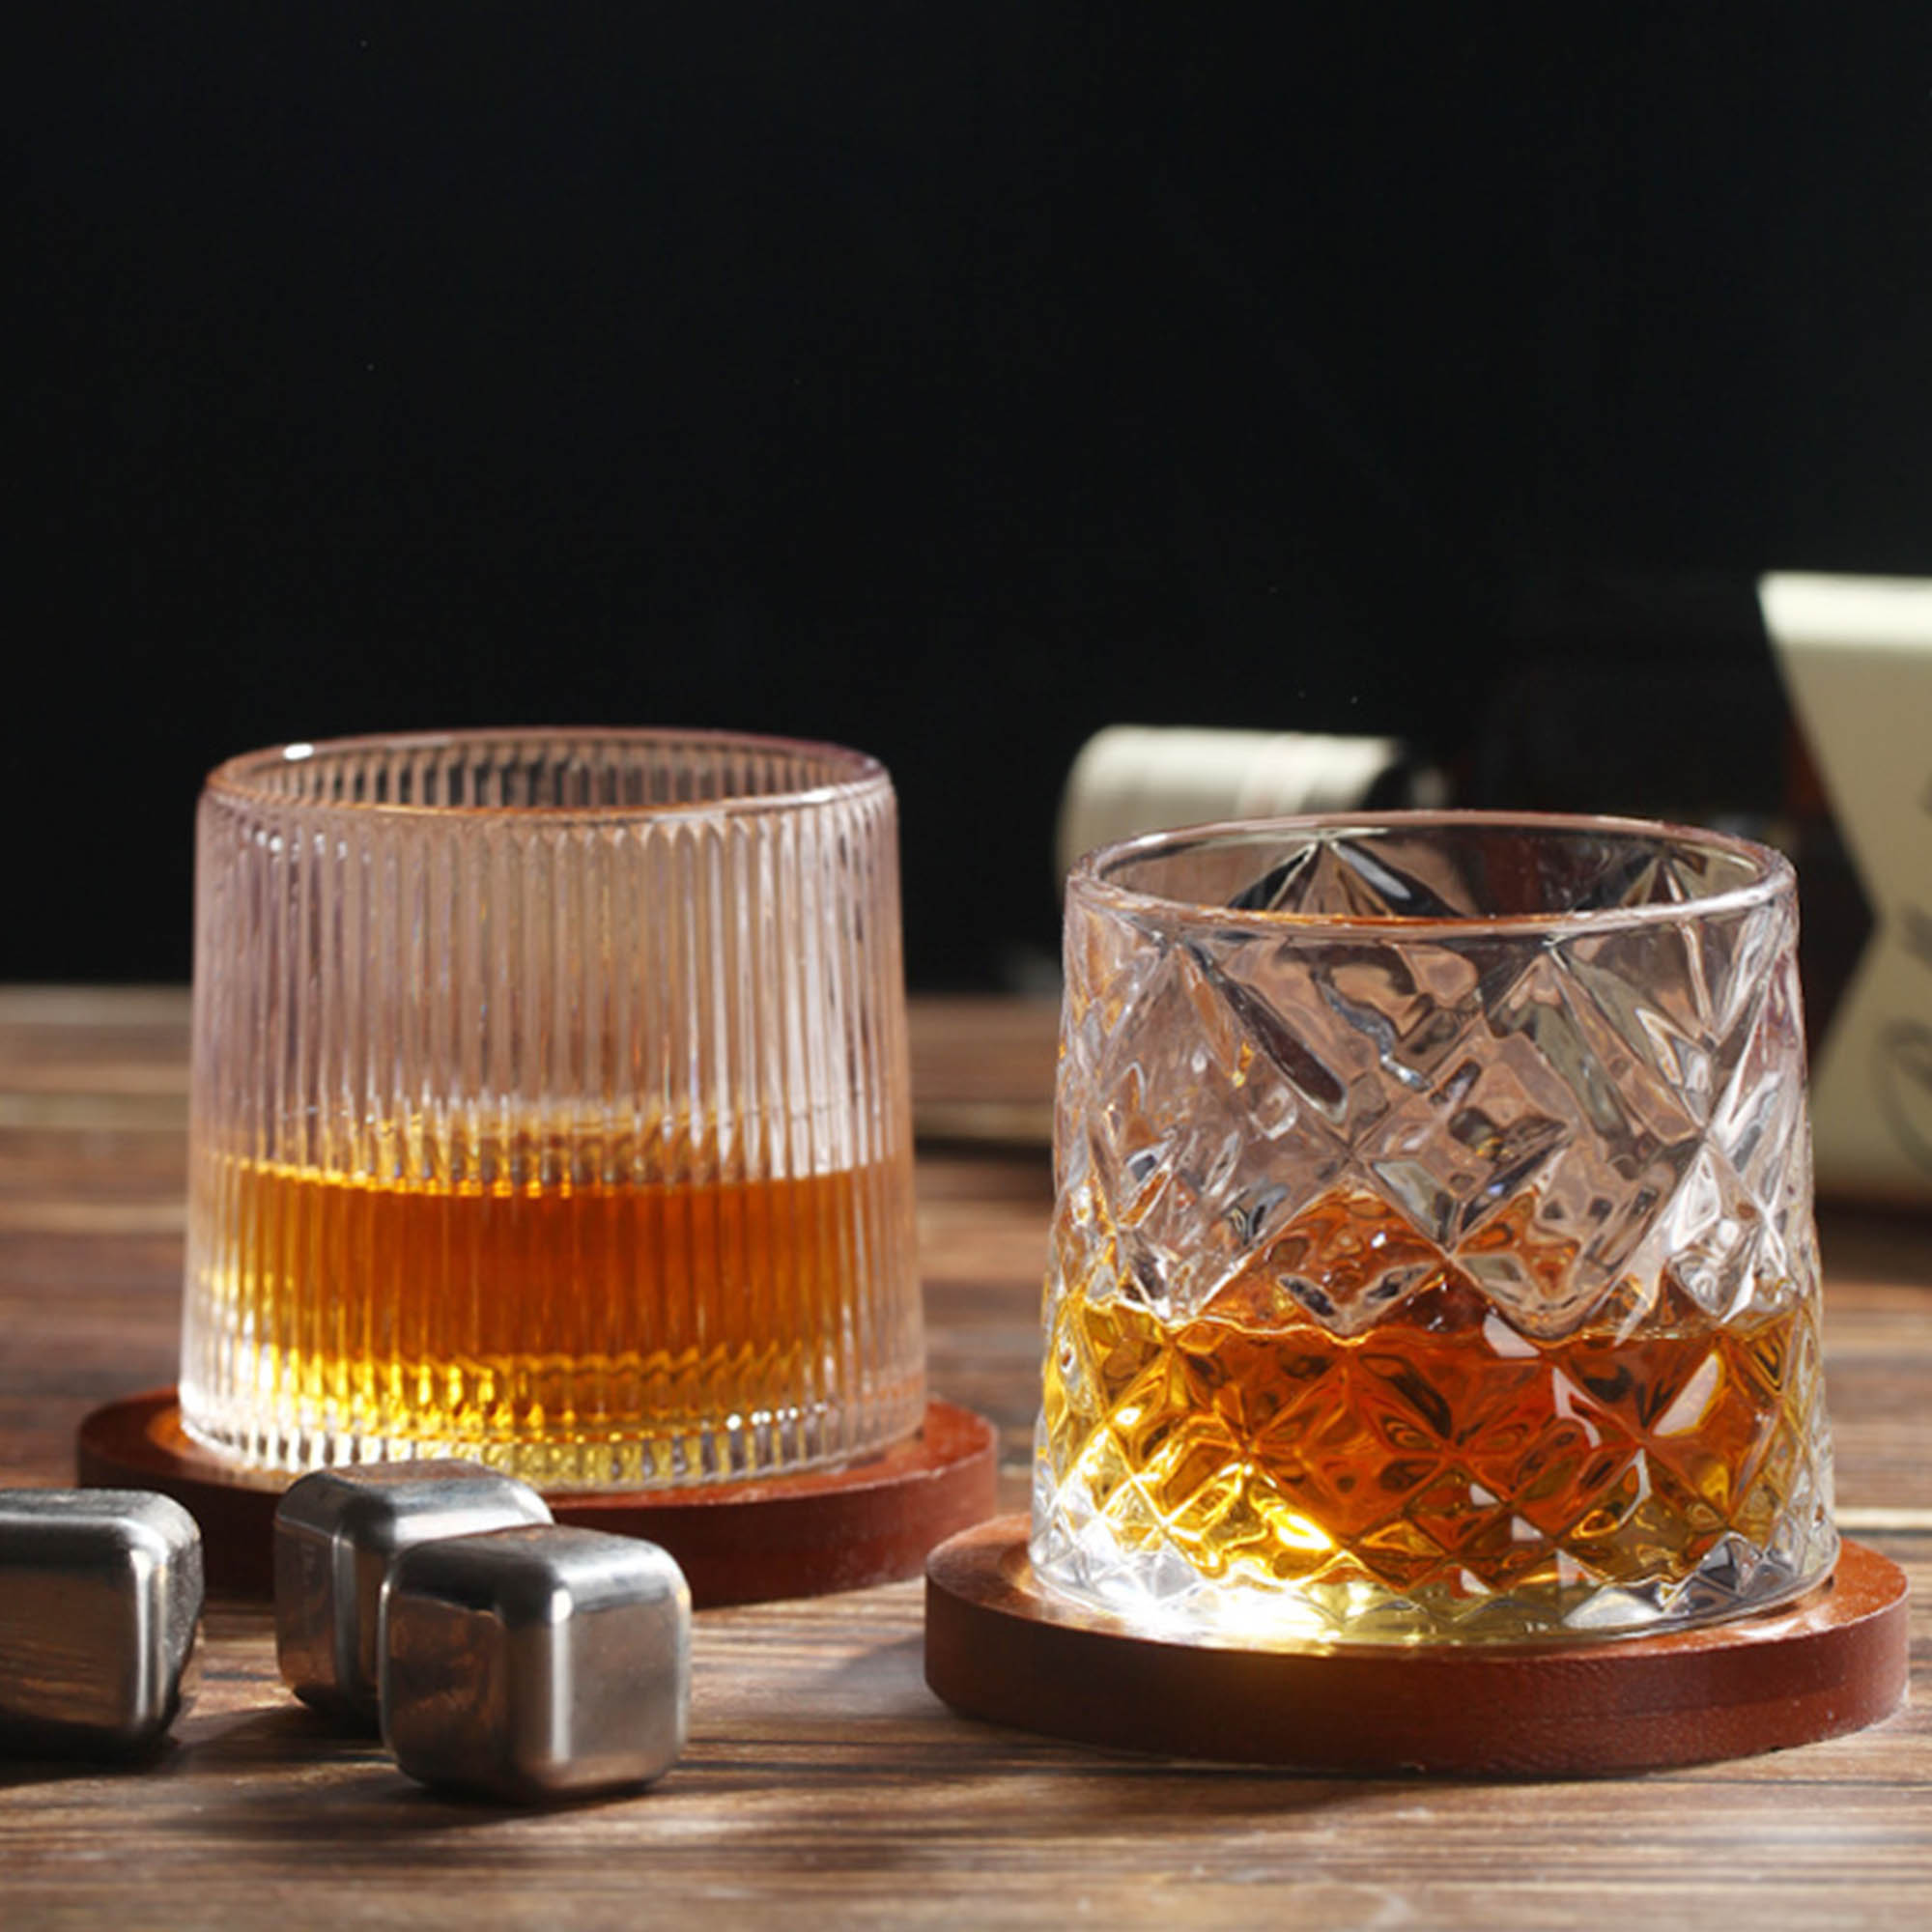 plazotta-schwenkglas-whiskyglas-wackelglas-rocking-glas-rillenrelief-rautenmuster-hauptbild